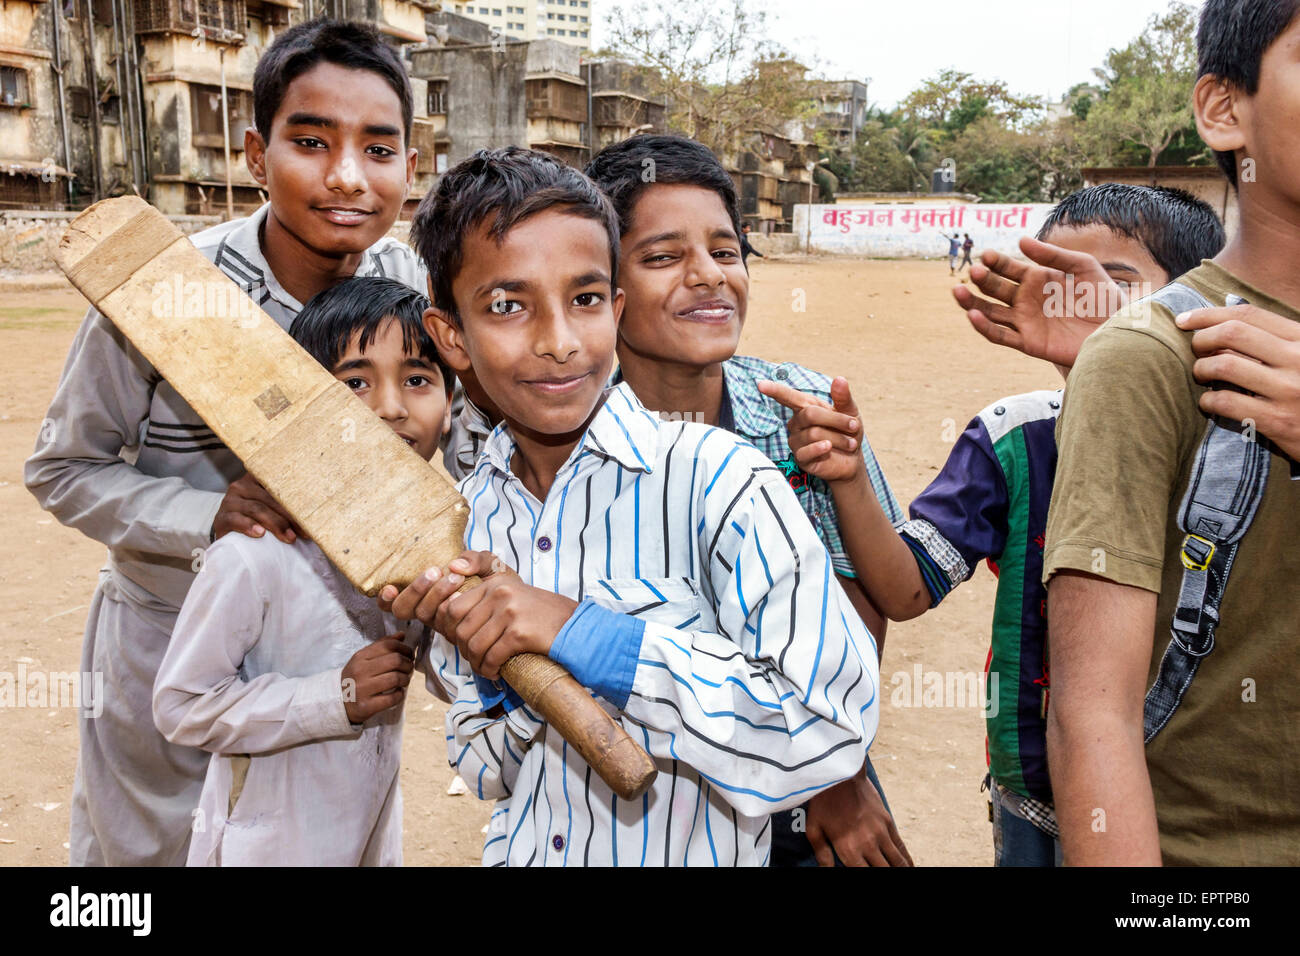 Mumbai India,Indian Asian,Dharavi,Shahu Nagar Road,slum,dirt lot,cricket field pitch,male boy boys lad lads kid kids child children,friends,playing,ba Stock Photo